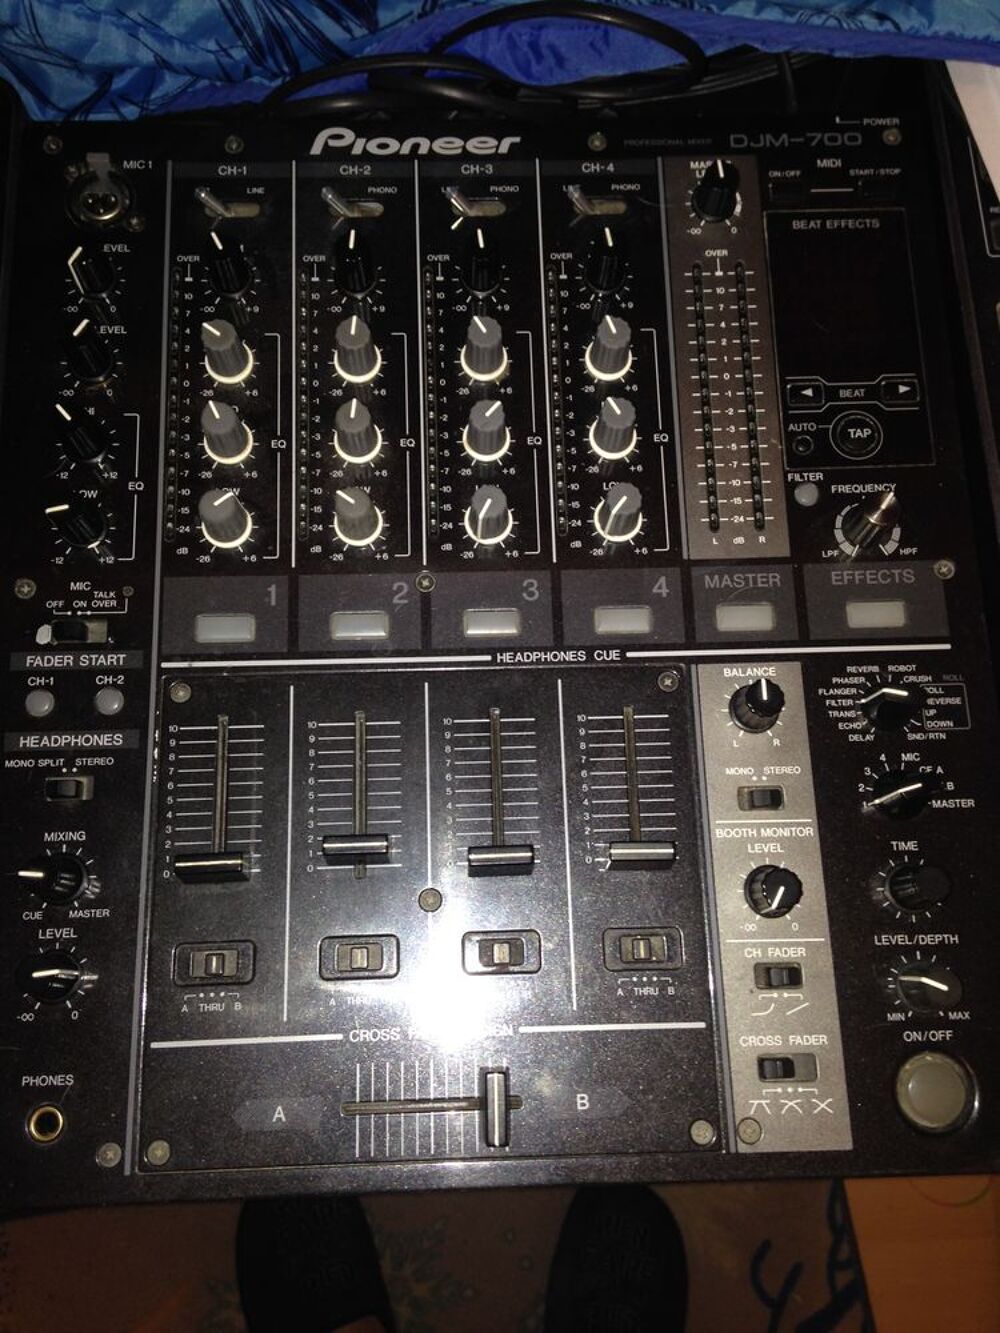  Table de mixage DJm 700 pioneer Instruments de musique